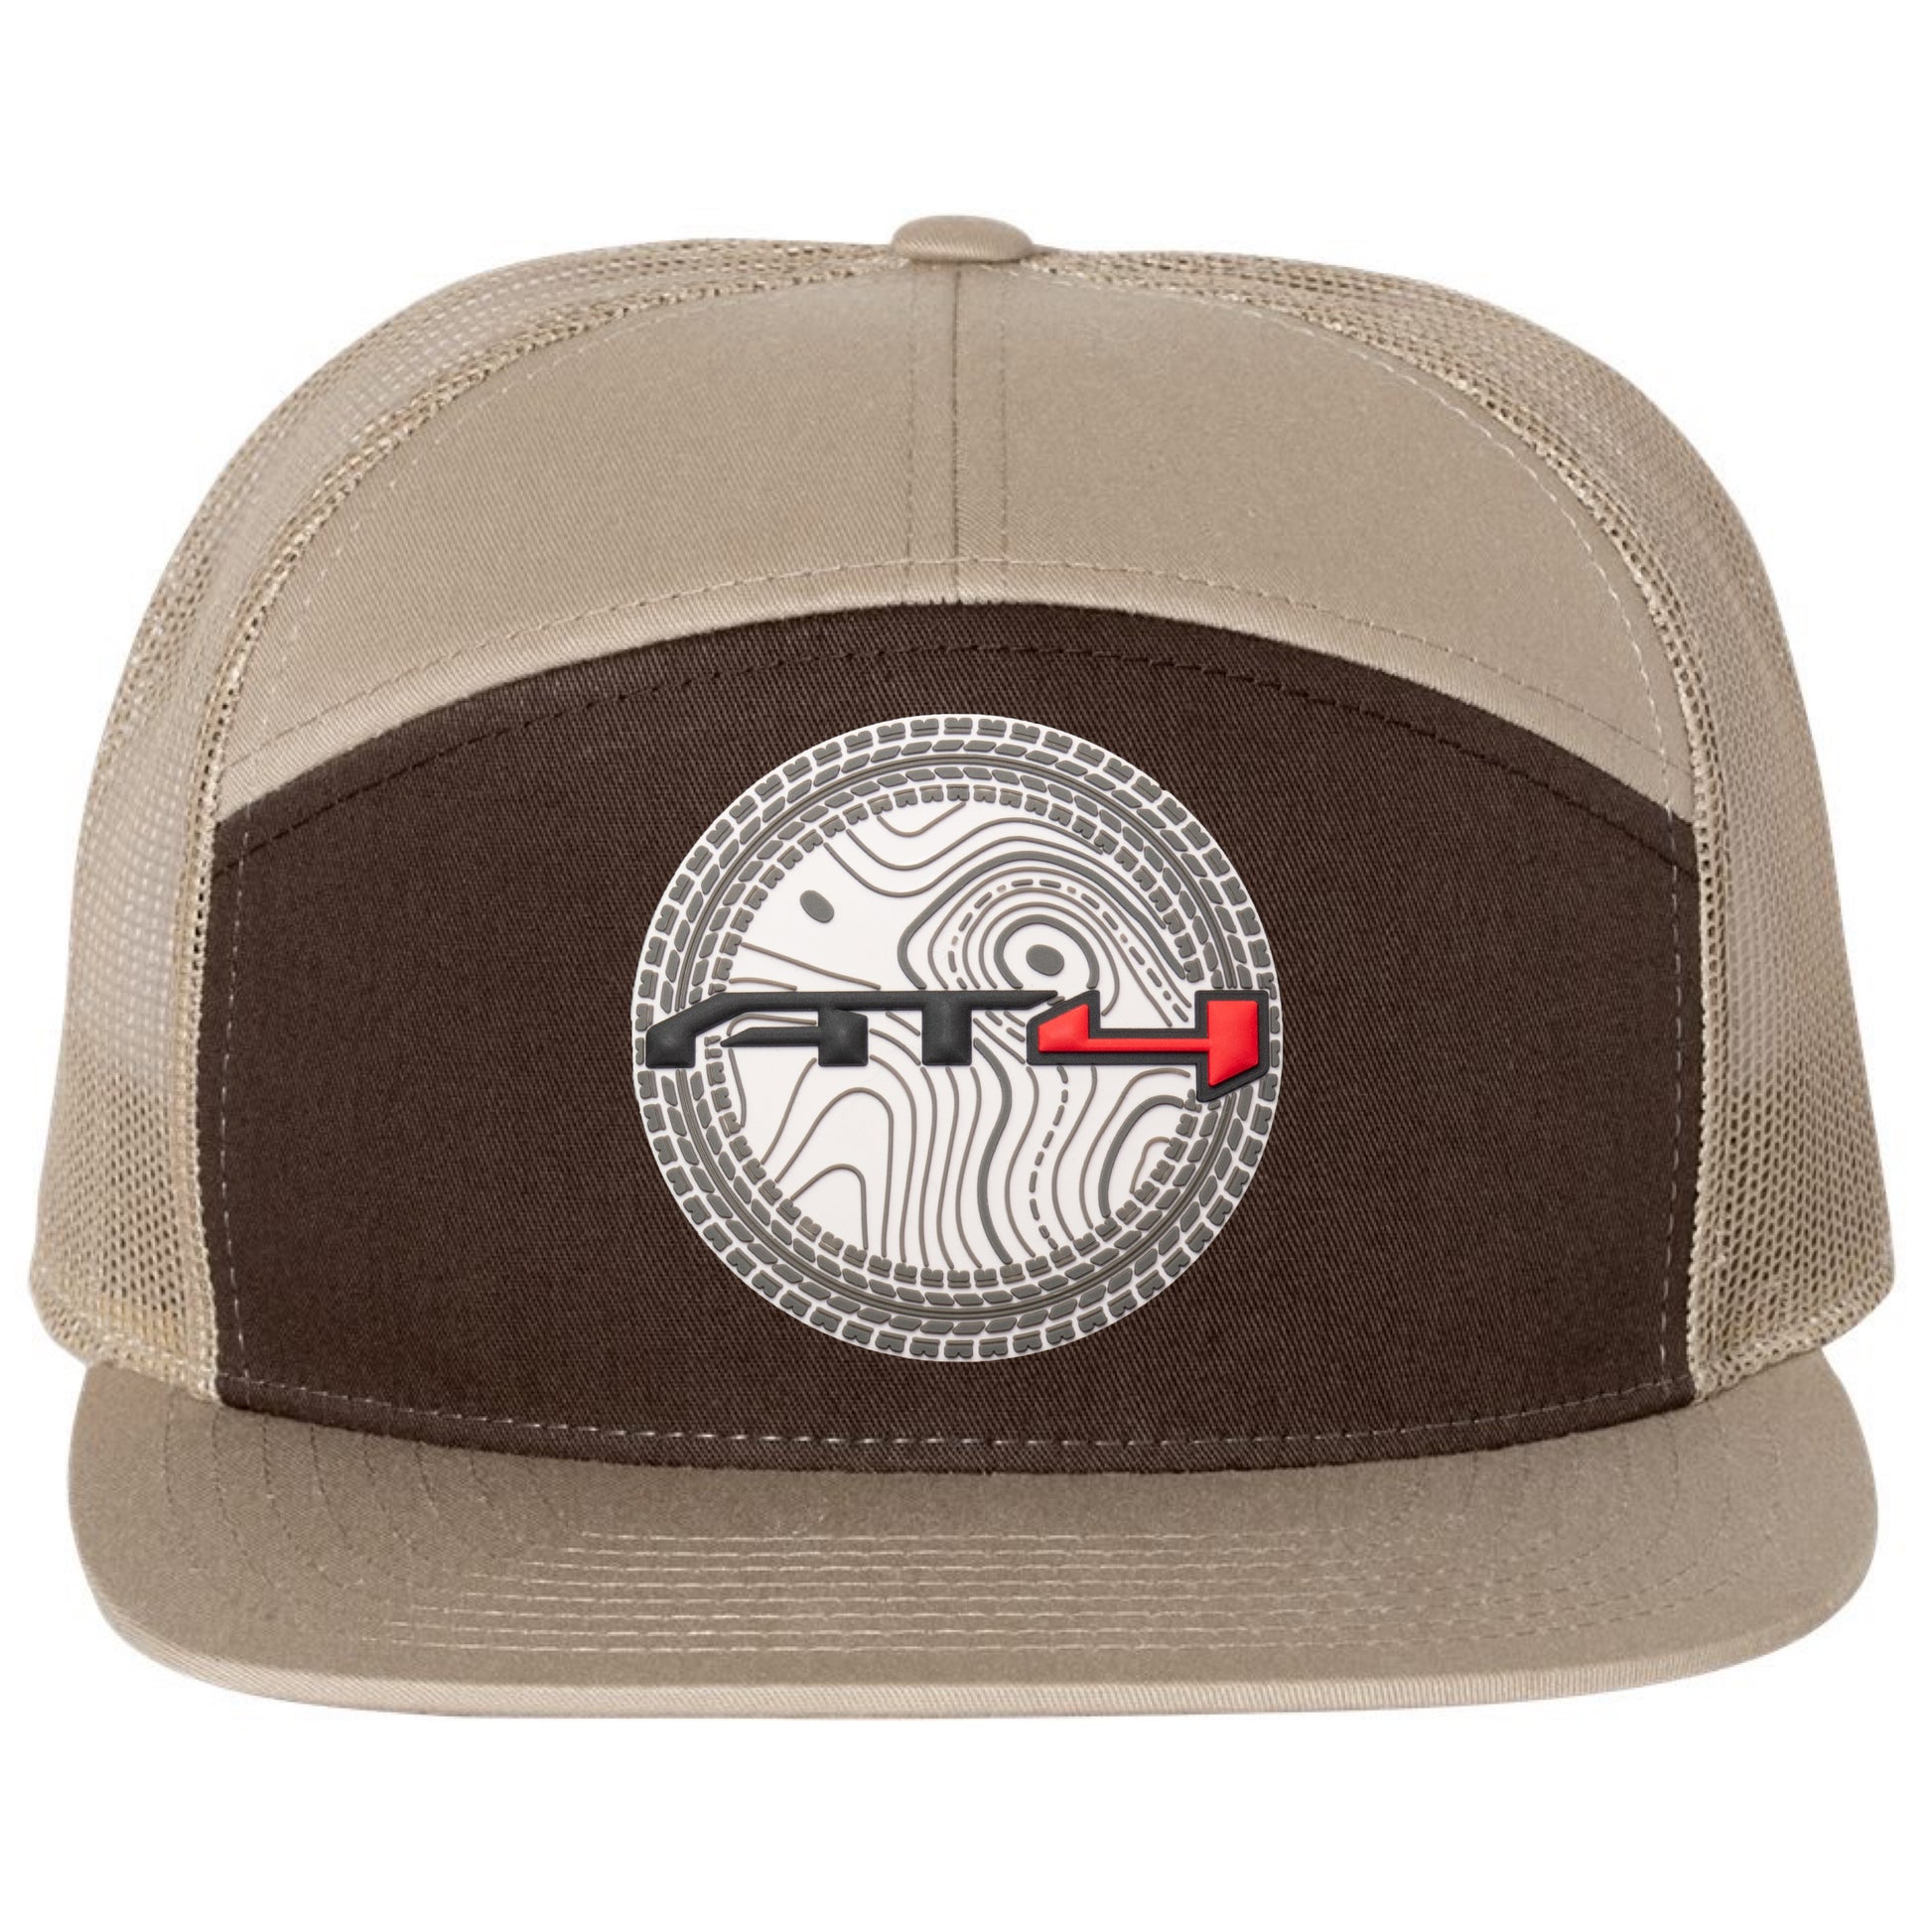 AT4 3D Snapback Seven-Panel Trucker Hat- Brown/ Khaki - Ten Gallon Hat Co.